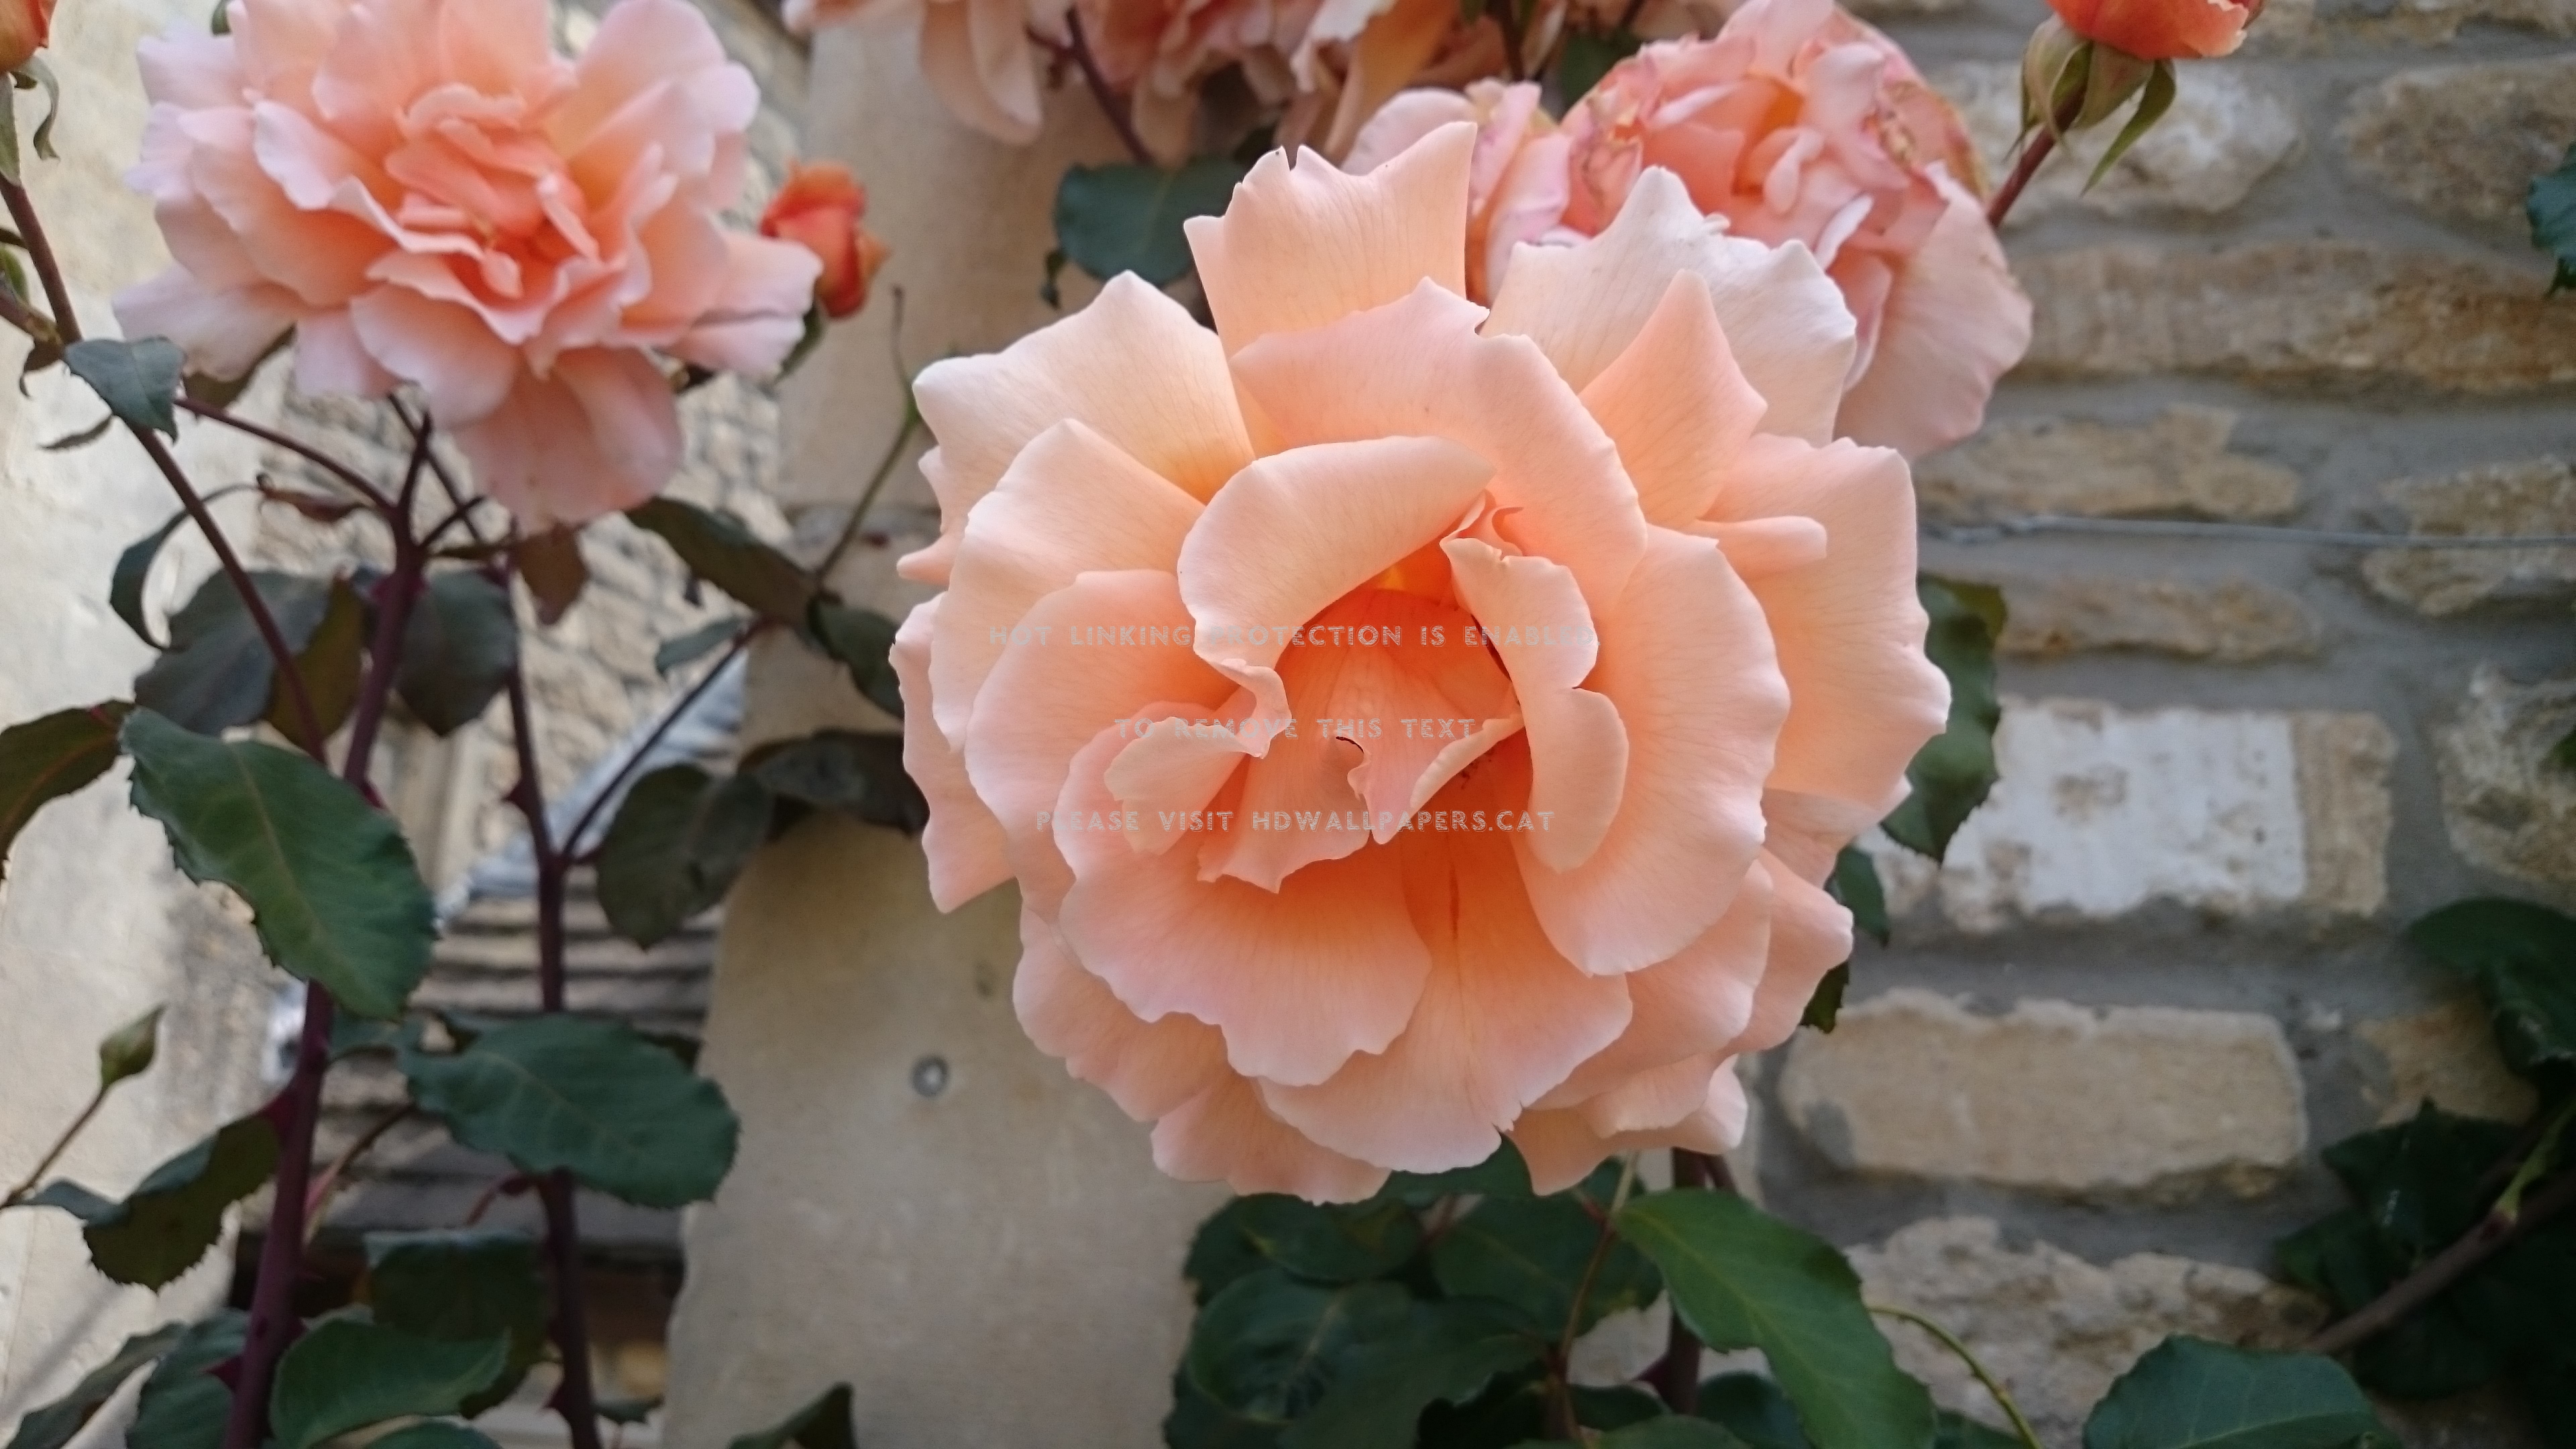 a peach rose flower fragrant nature